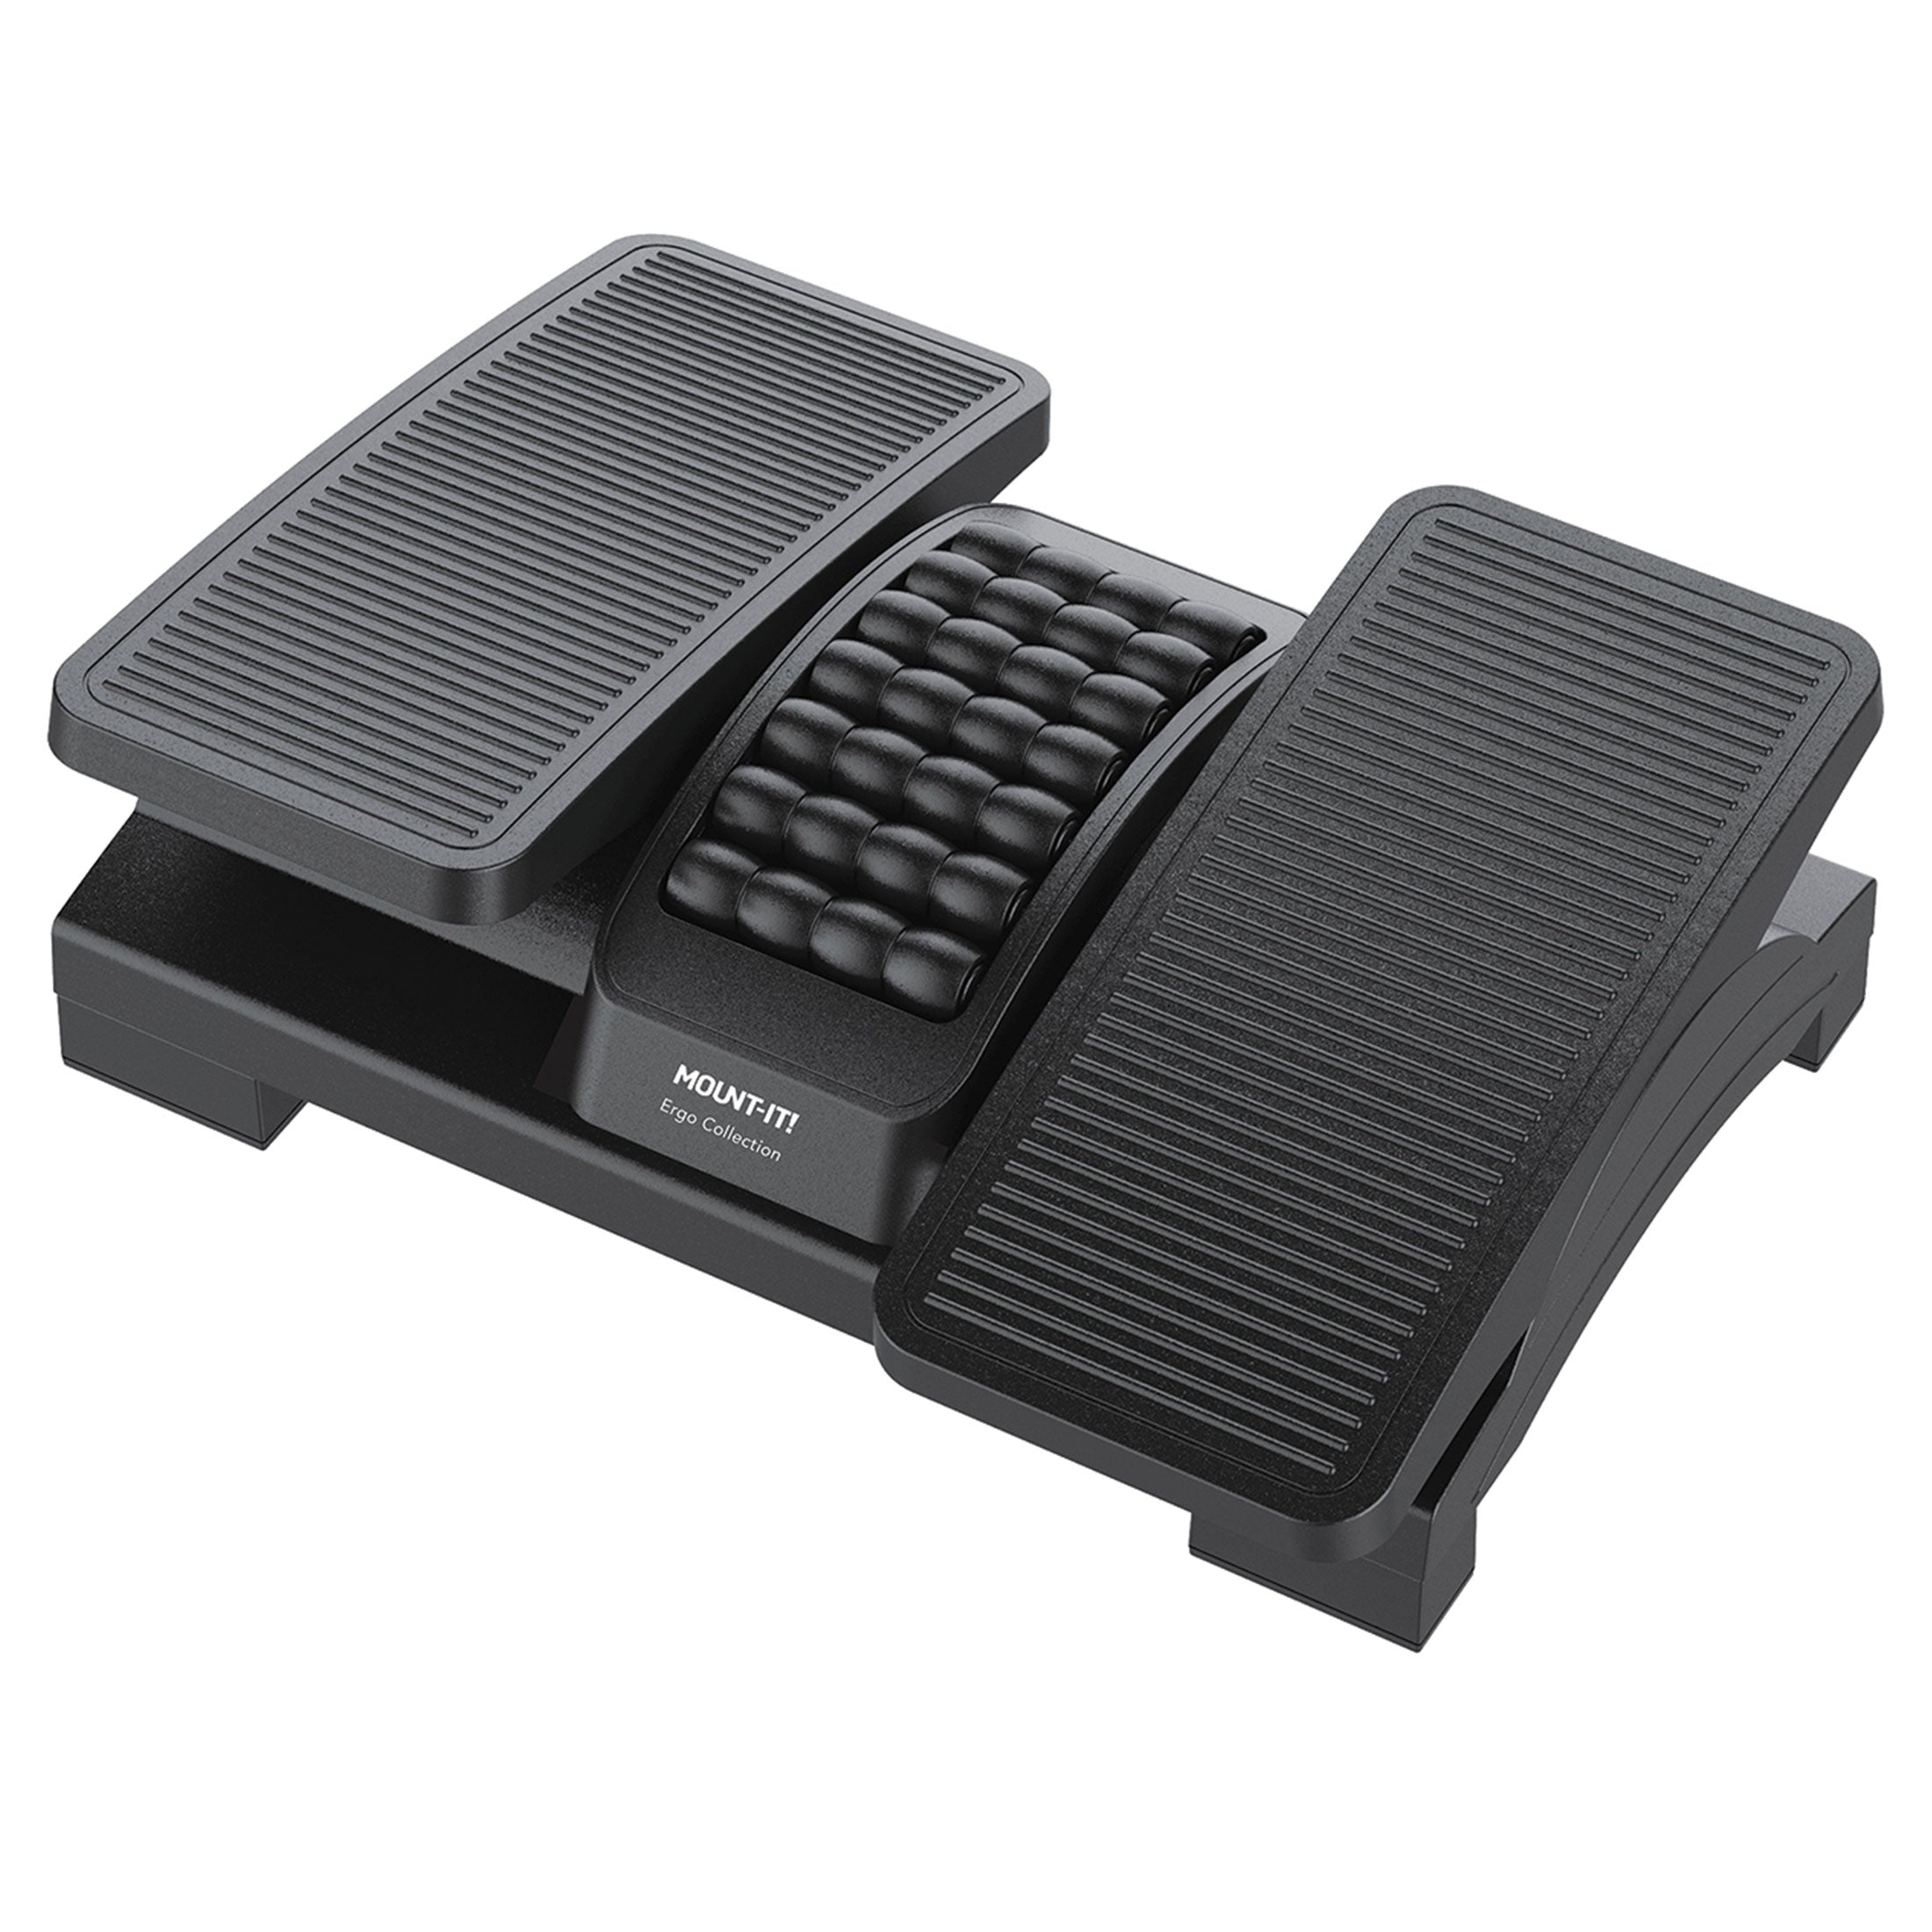 This ergonomic footrest helps 'improve circulation' — shop it on